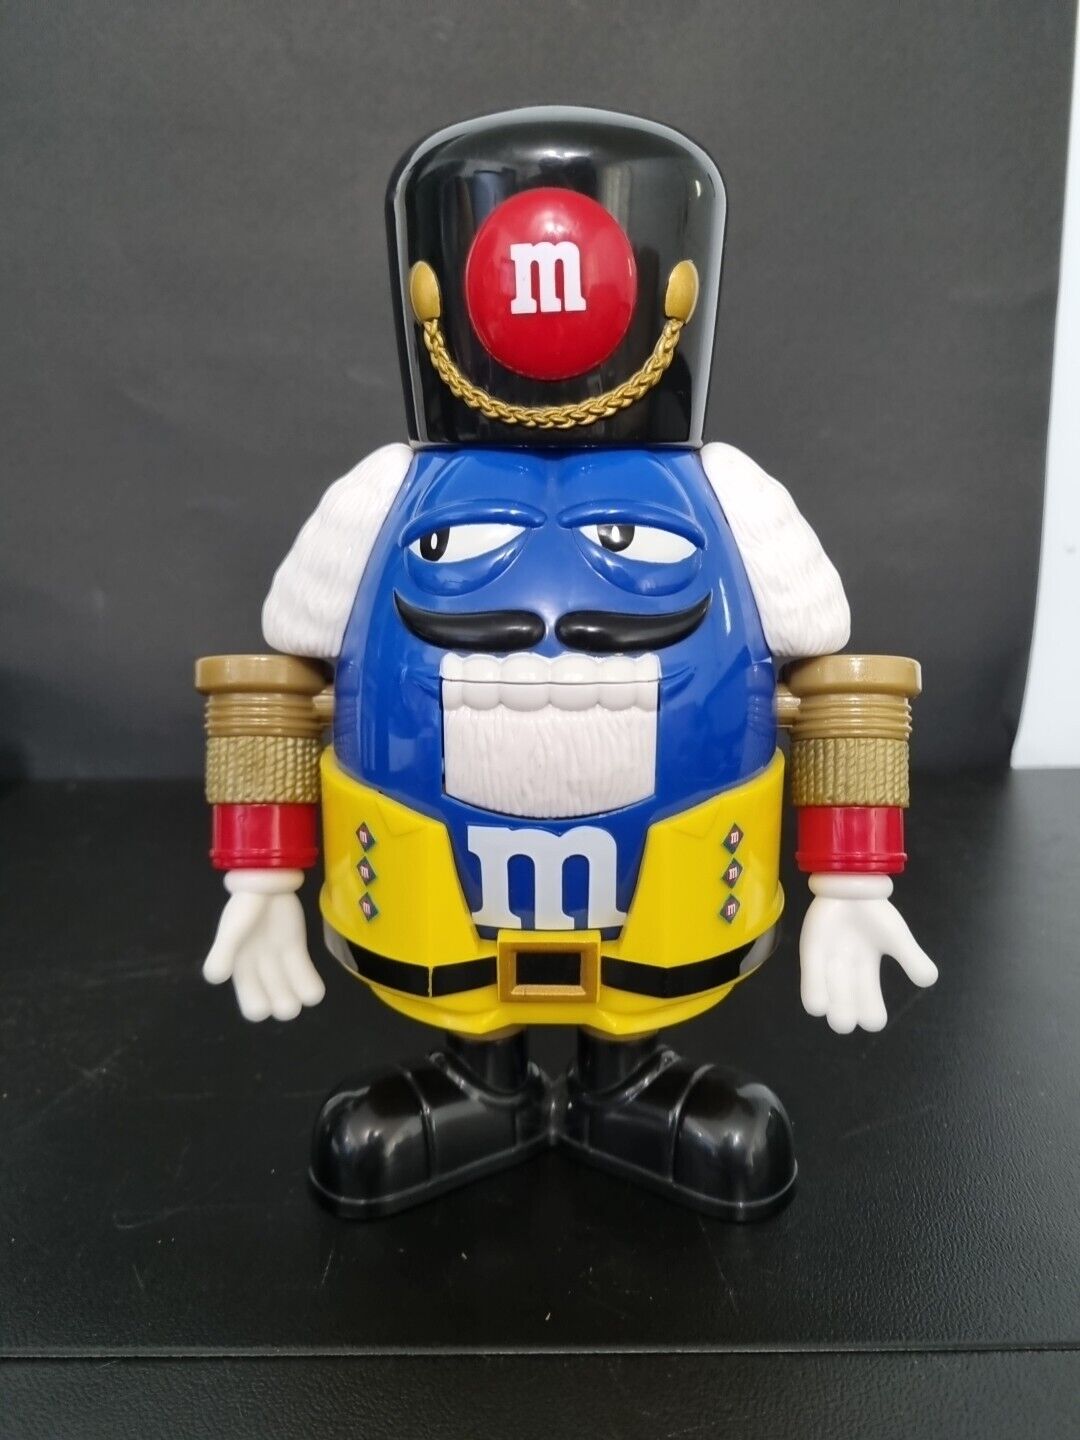 M&M Mars Blue Nutcracker Limited Holiday Edition Candy Dispenser